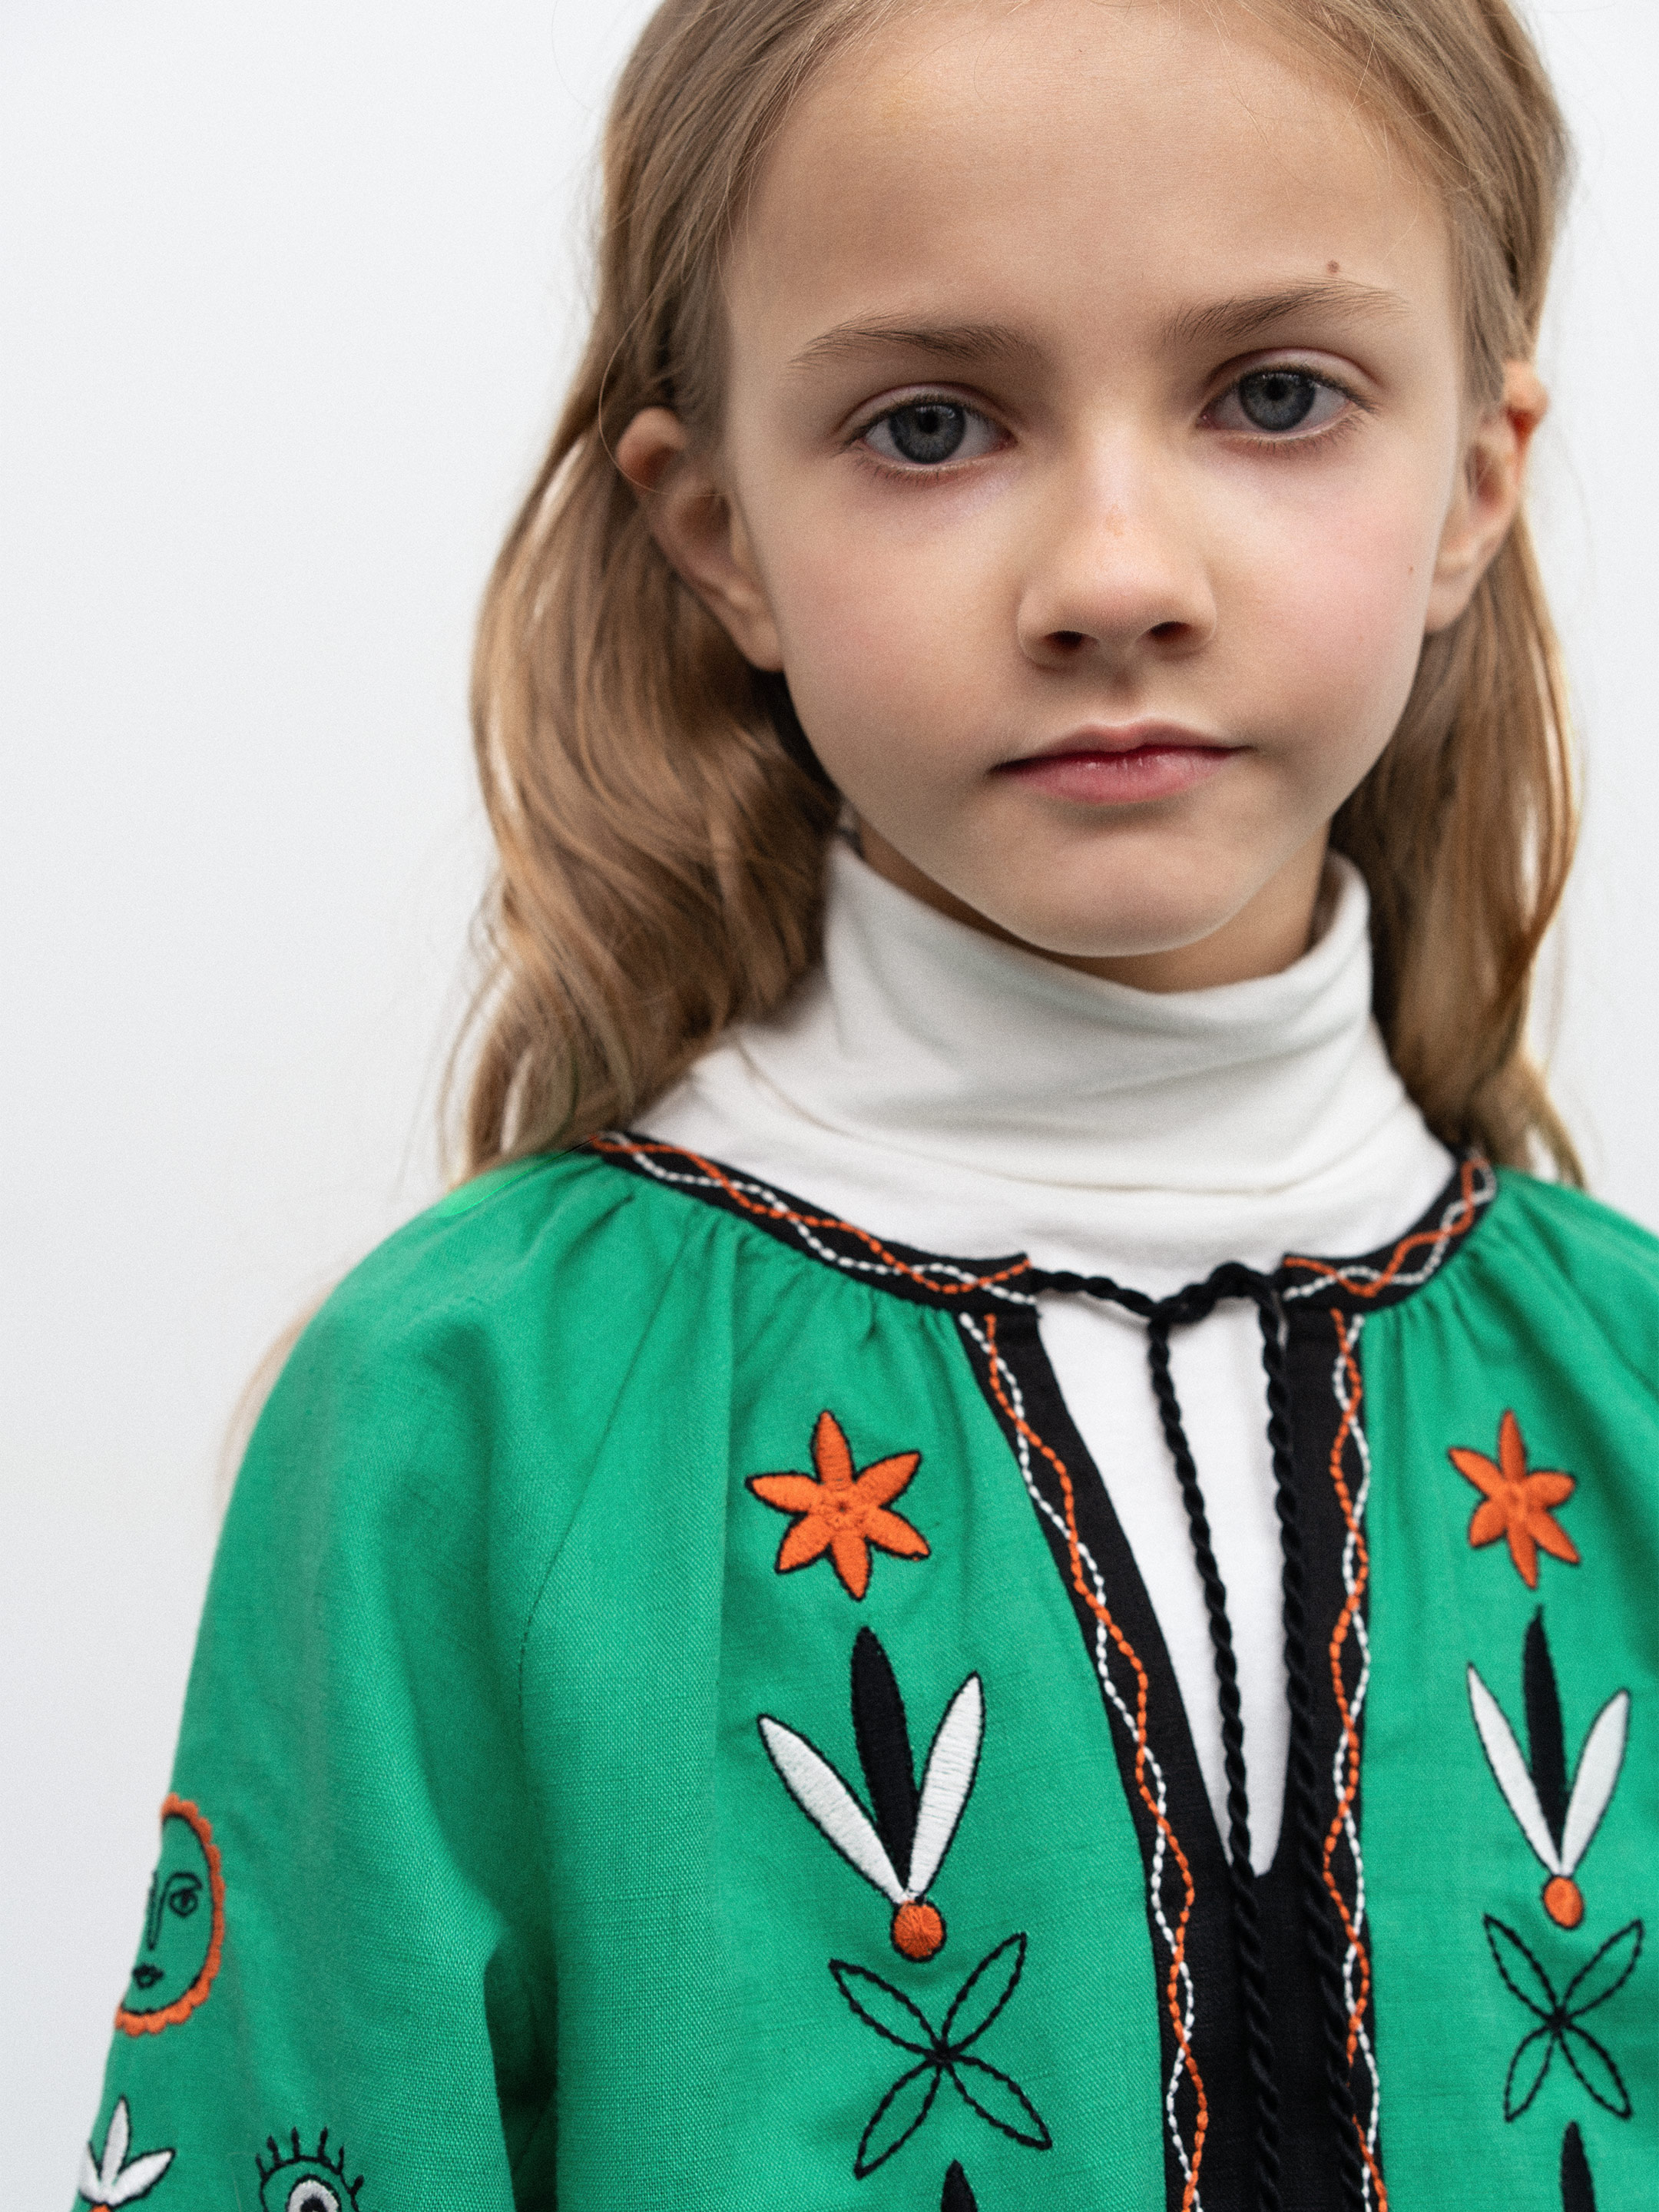 Divchyna Trostynka embroidered children's dress - photo 2